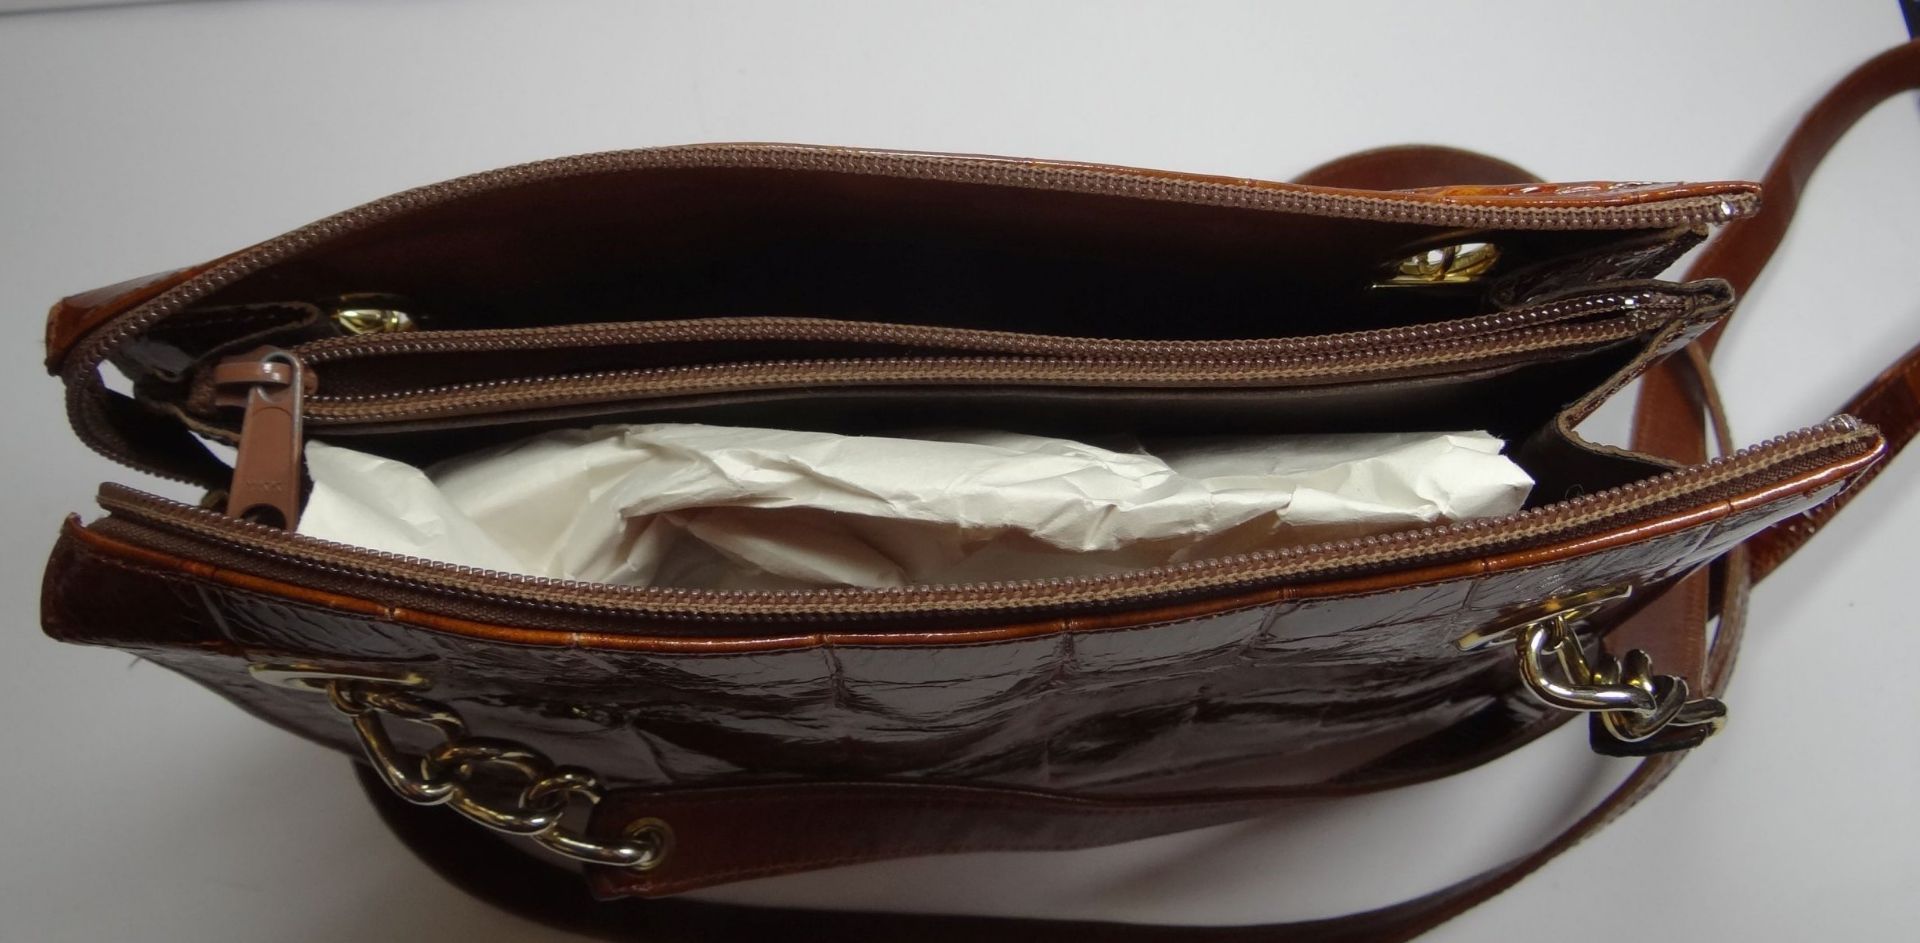 Damenhandtasche "Rolf Dey" Leder, Reptilienlook, guter Zustand, 23x26 cm - Bild 4 aus 5